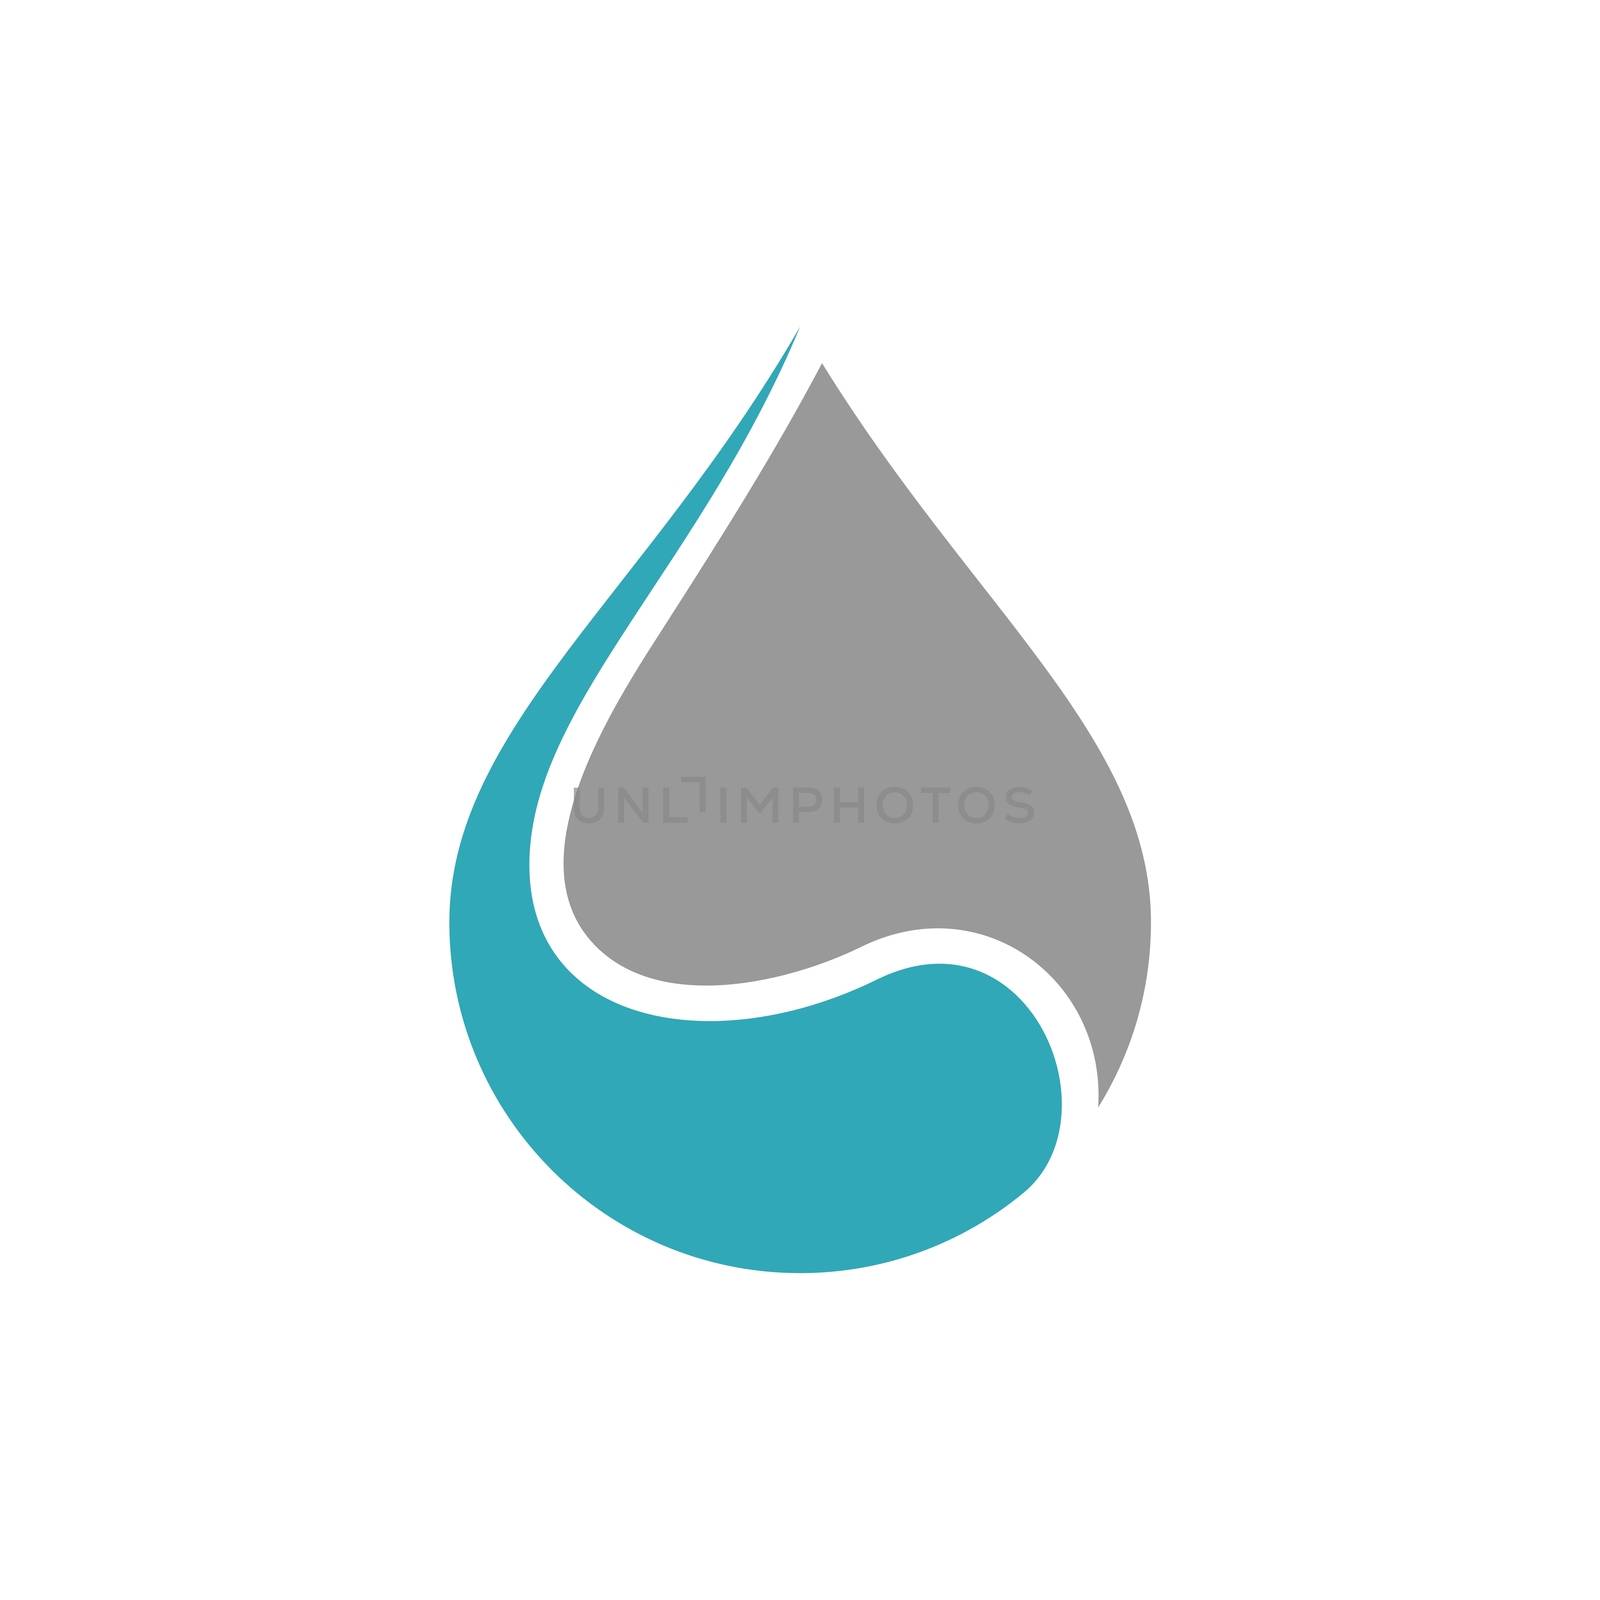 Drop Water vector Logo Template Illustration Design. Vector EPS 10.